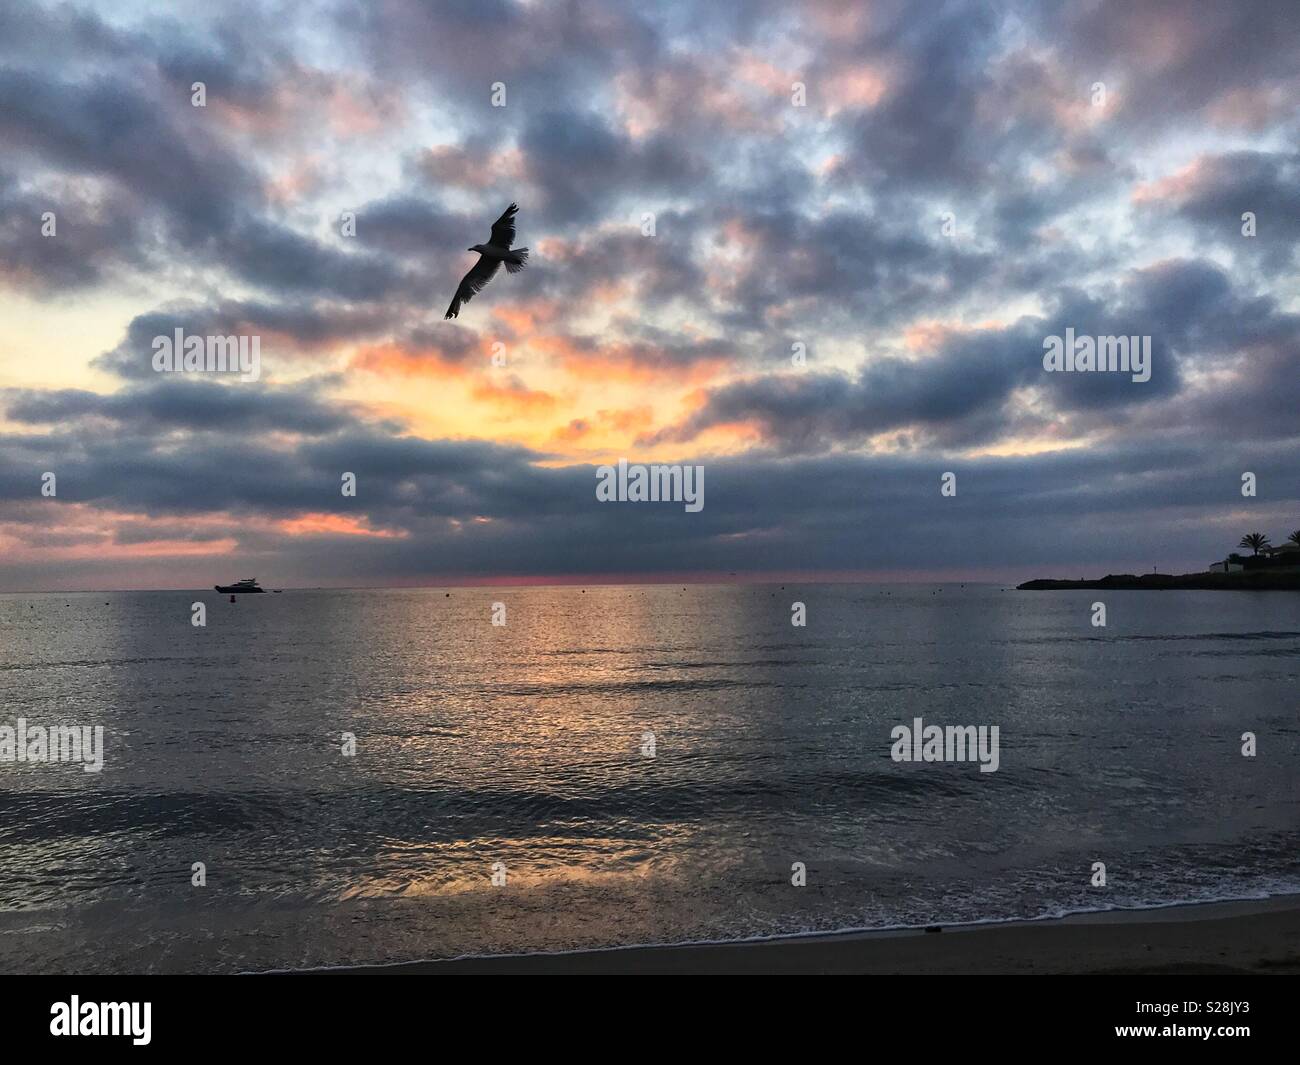 Sunrise over sea with seagulls in flight Stock Photo